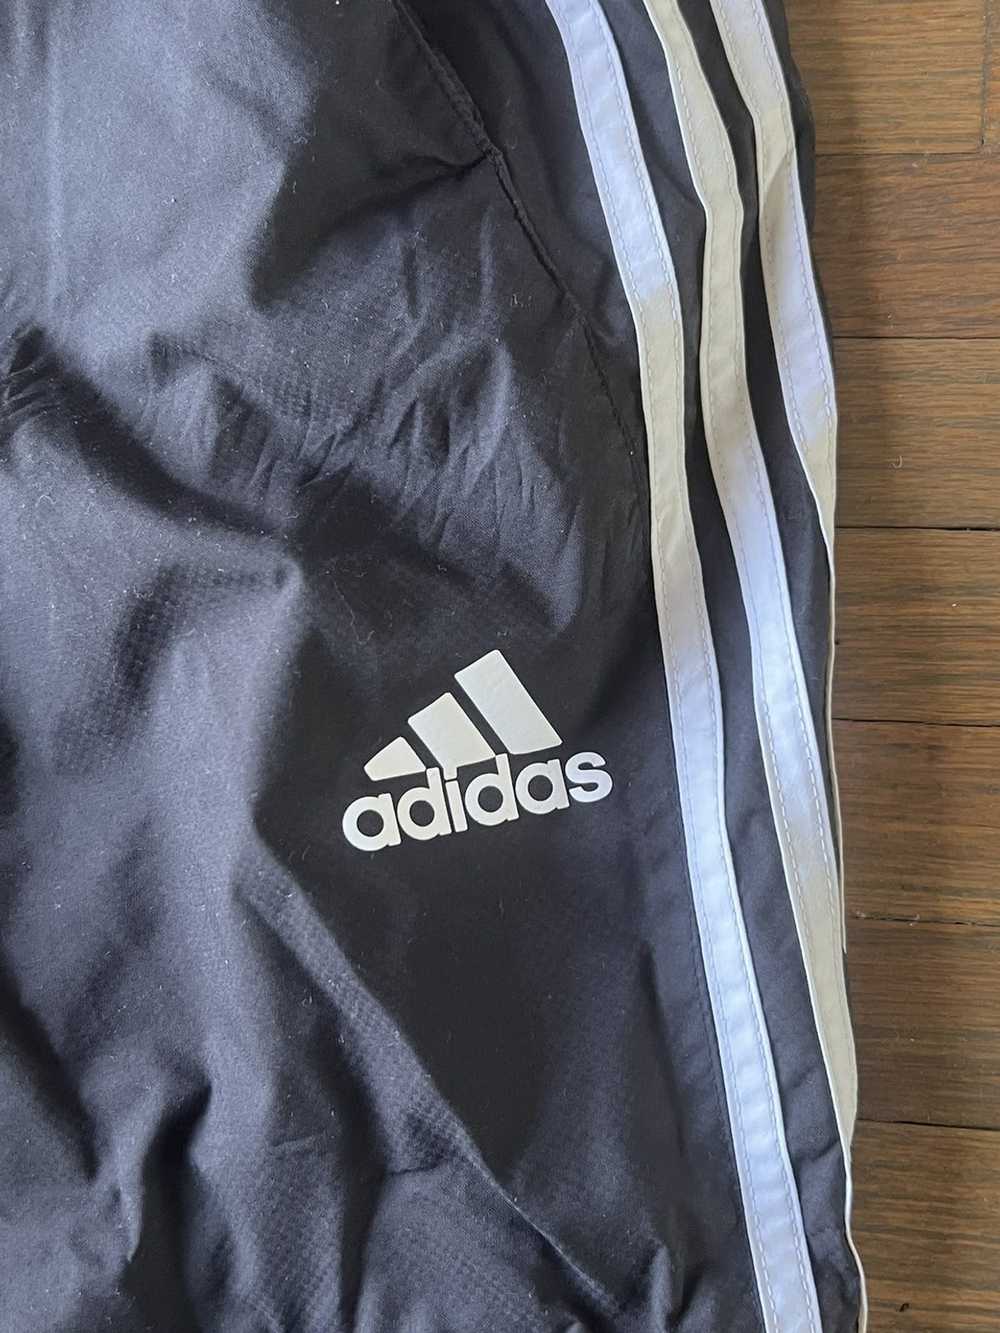 Adidas Adidas zip up track pants - image 4